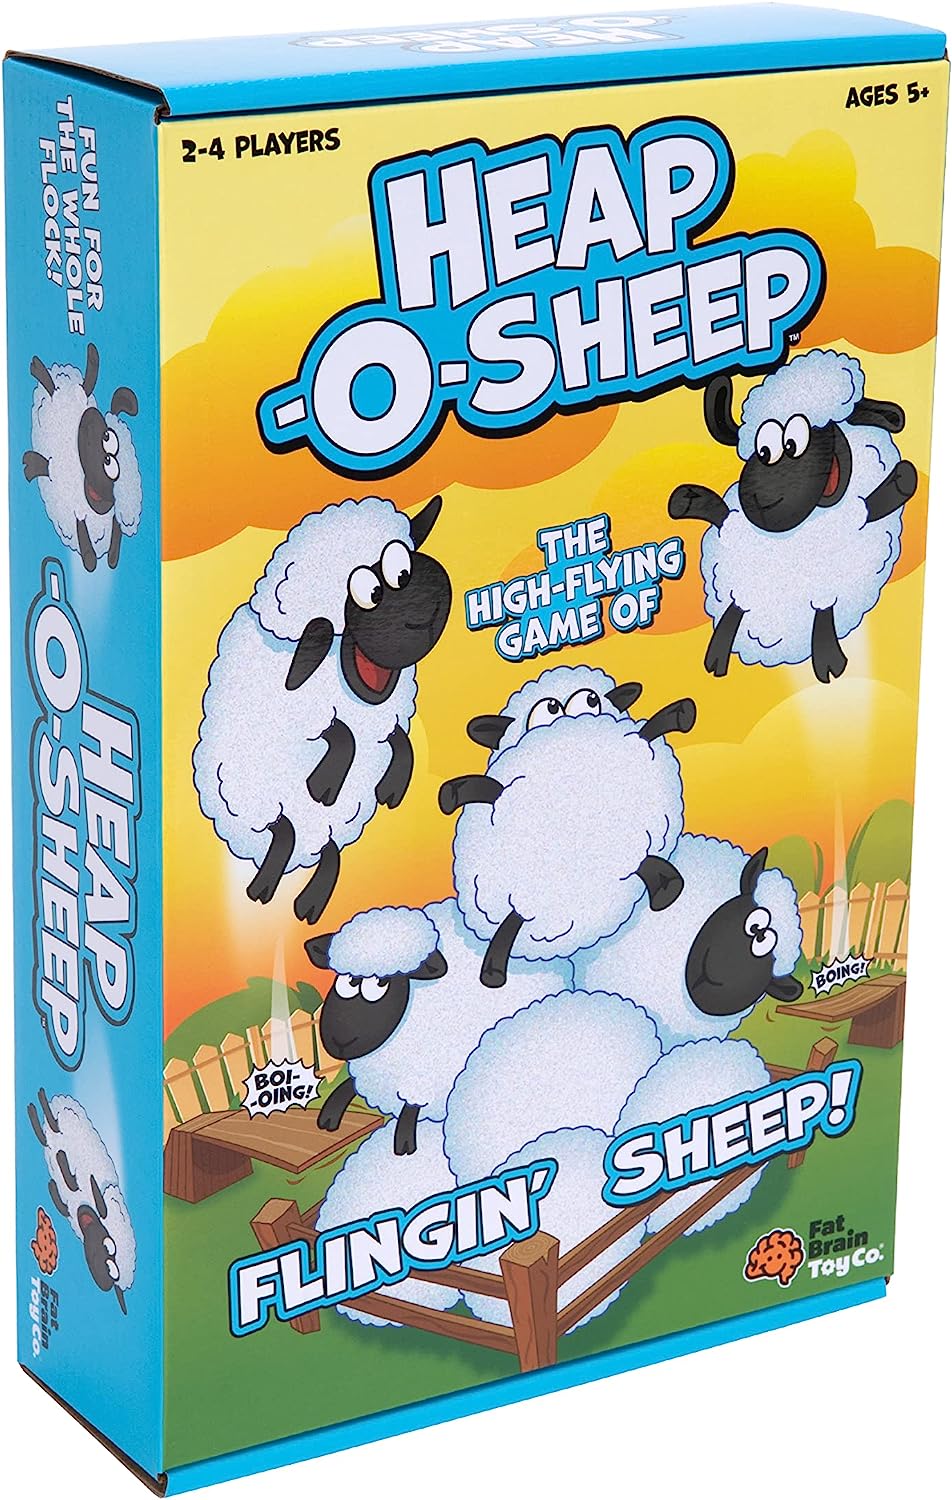 Heap-O-Sheep